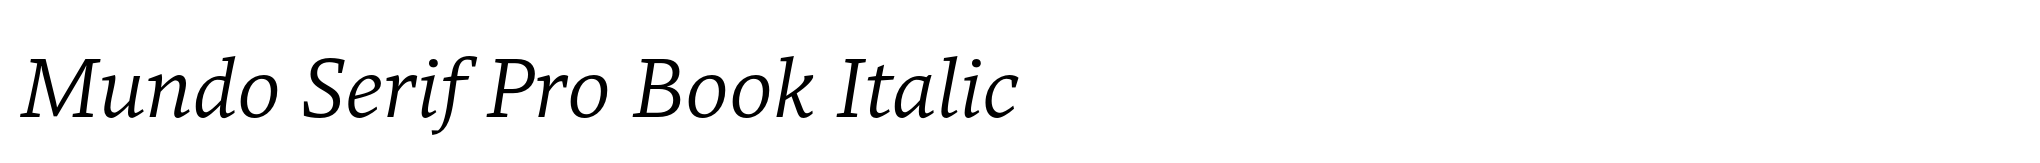 Mundo Serif Pro Book Italic image